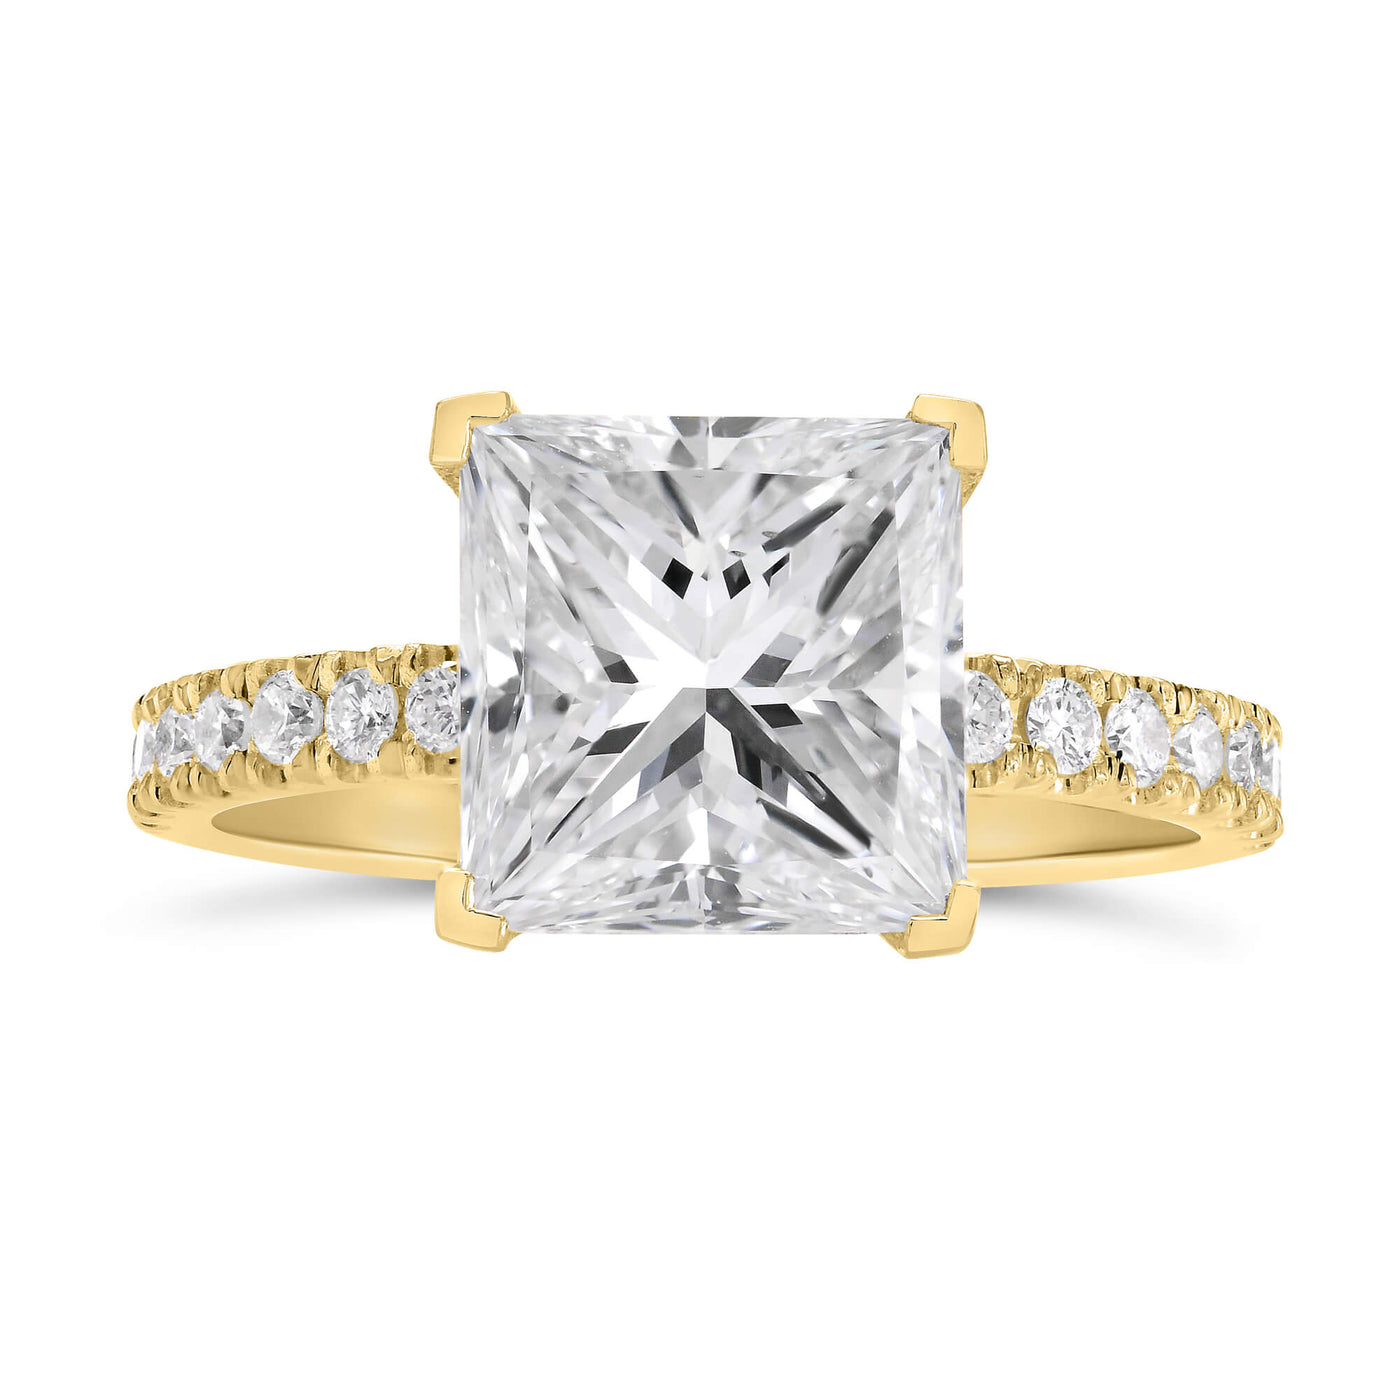 Carmen Princess Engagement Ring